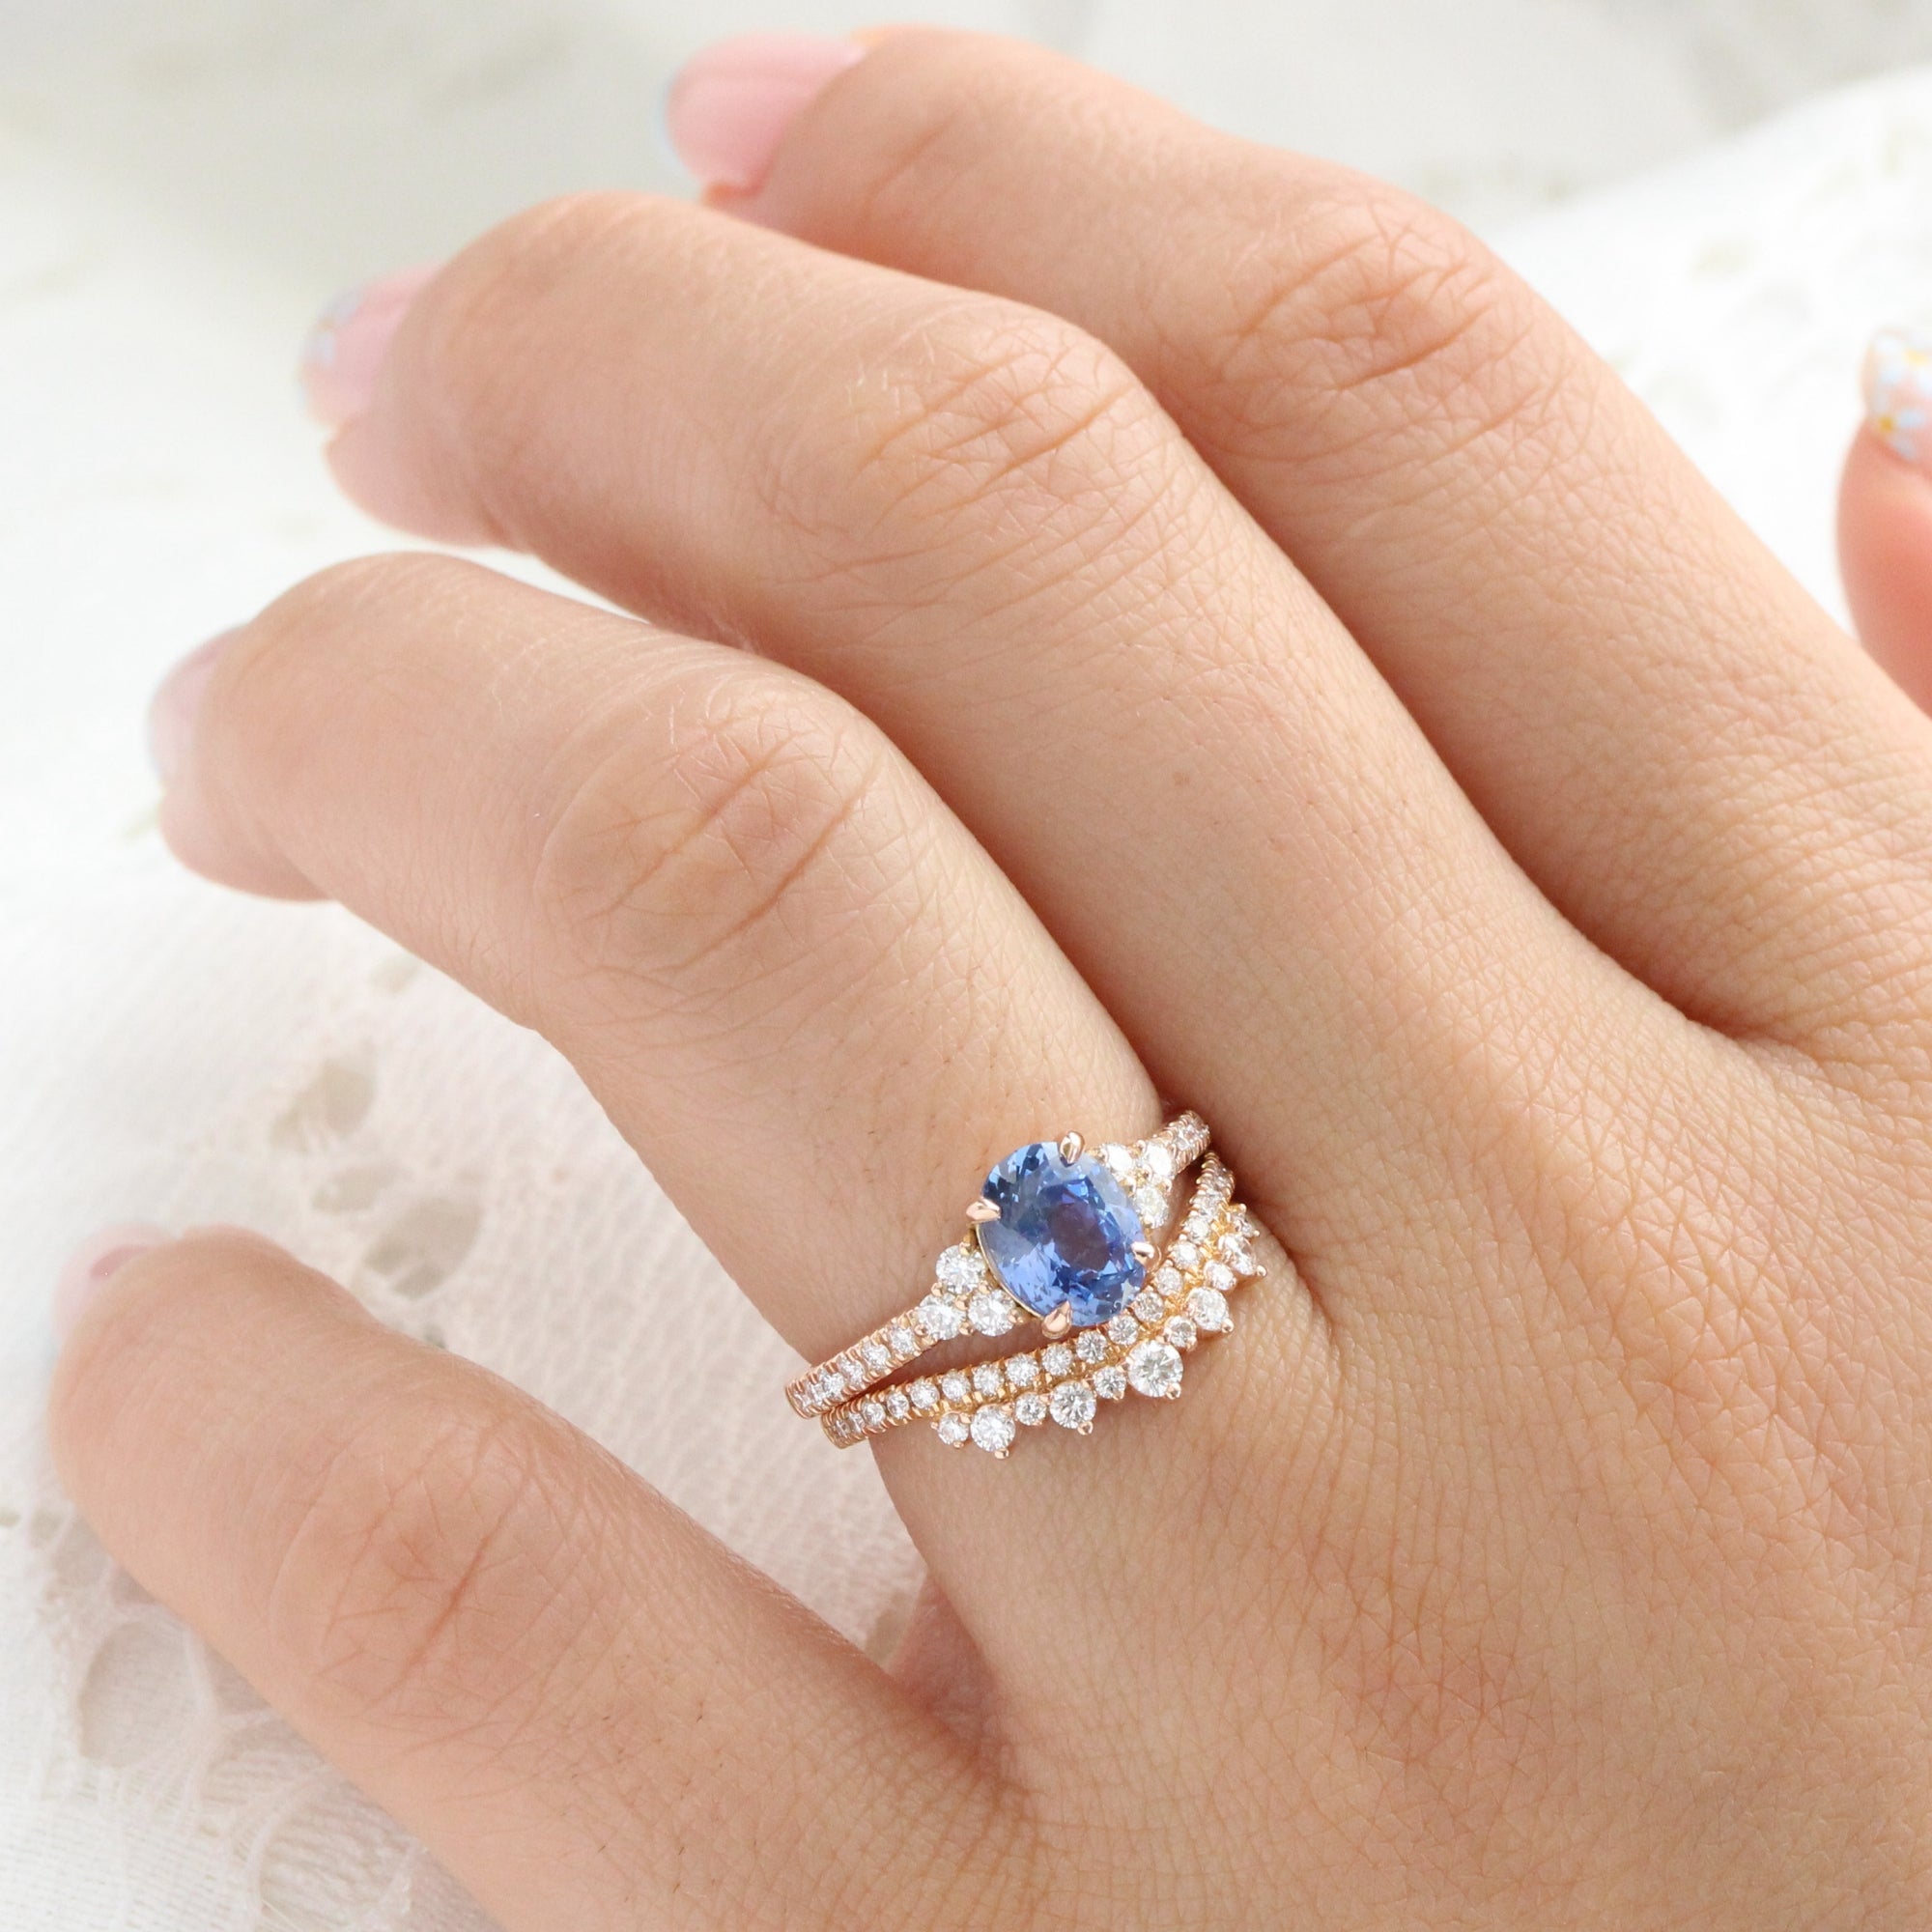 Oval Ceylon blue sapphire ring rose gold 3 stone diamond ring la more design jewelry